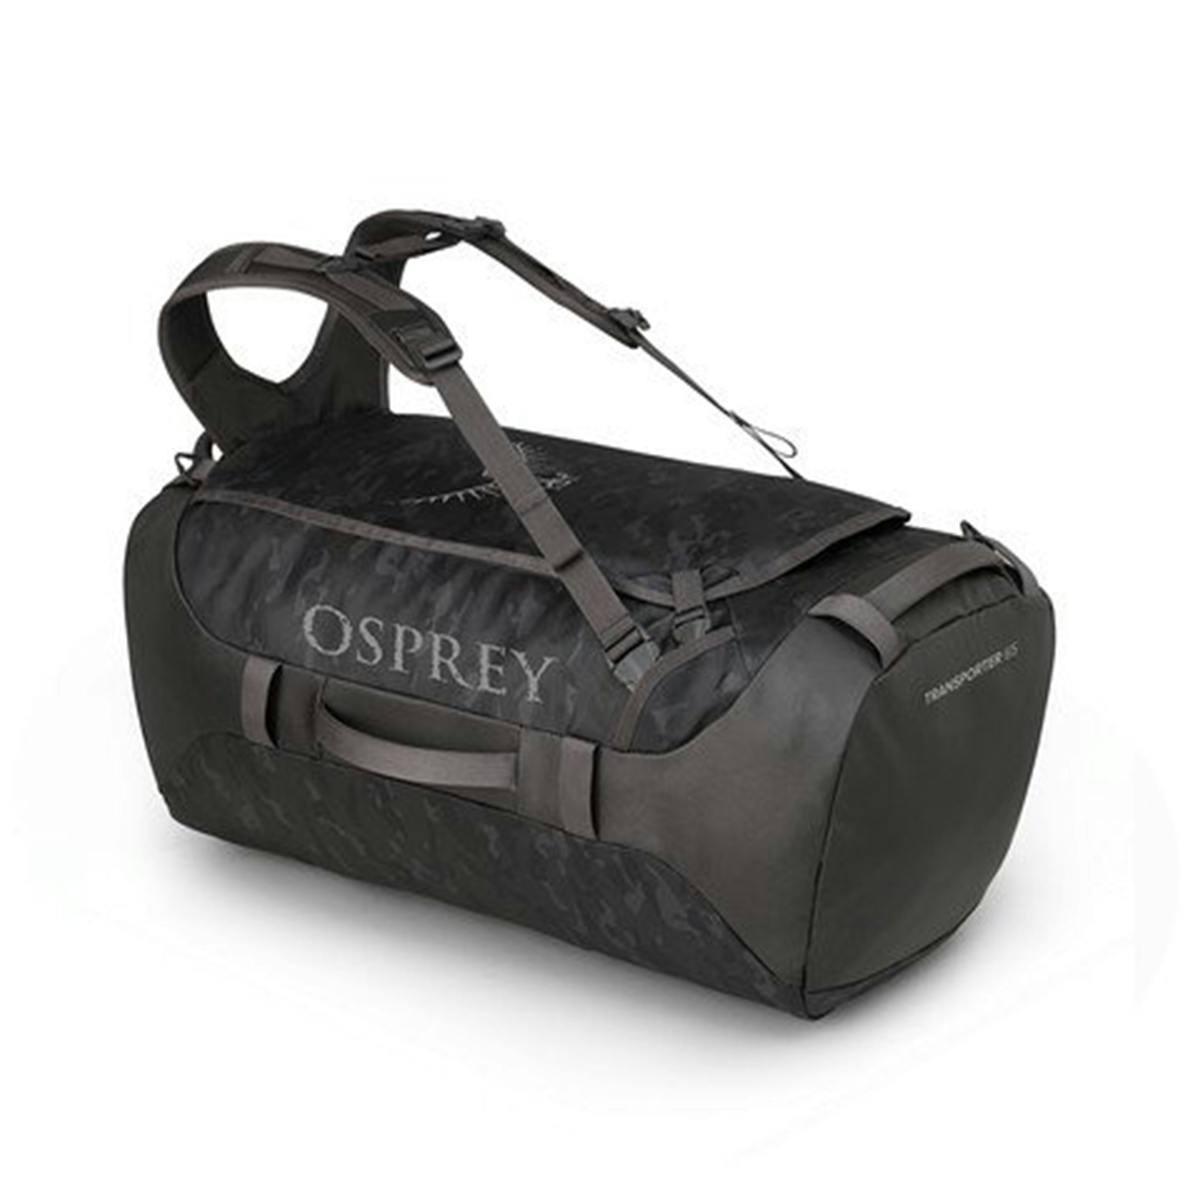 Osprey Transporter 65 Dive Gear Duffel Bag - 65 Liter - Camo Black